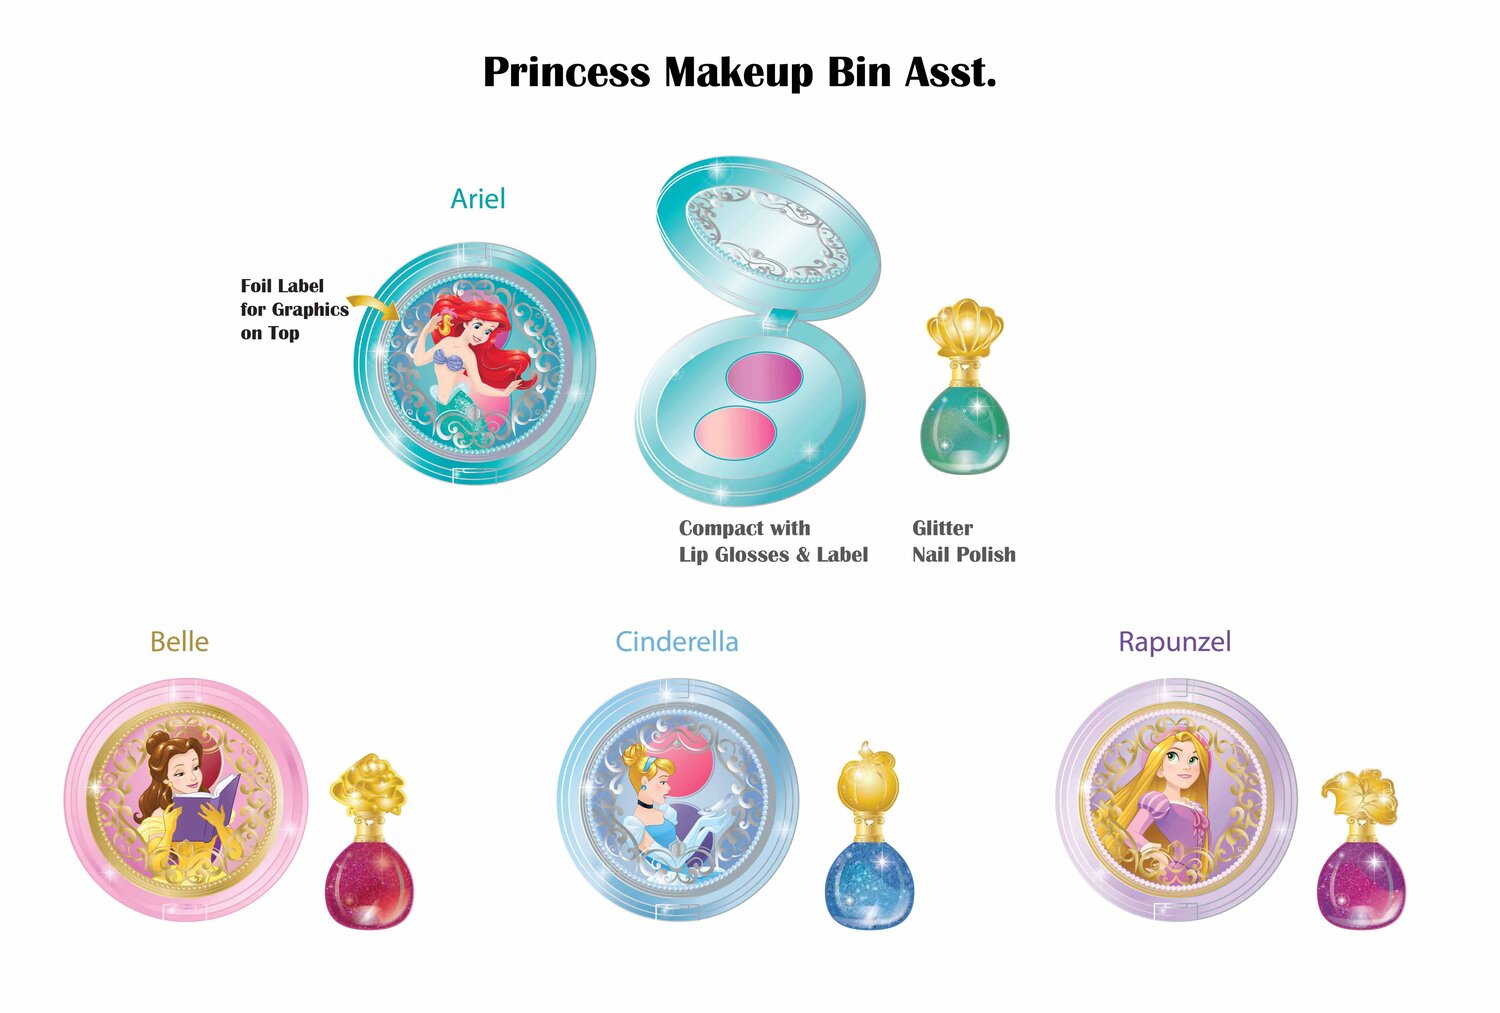 Disney Princess Dp Nail Polish Set 